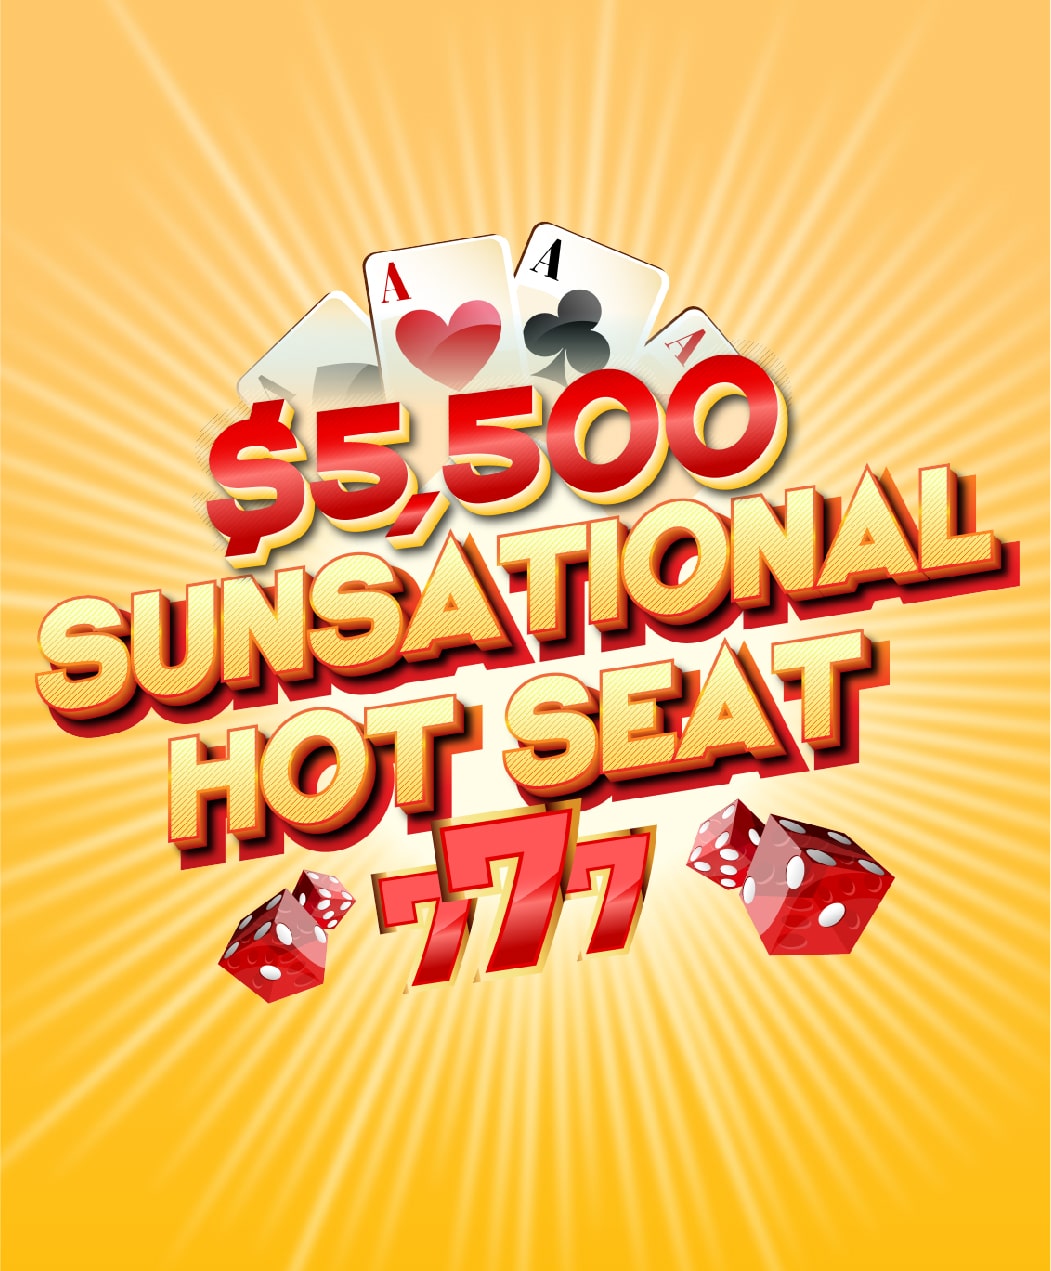 $5,500 Sunsational Hot Seat